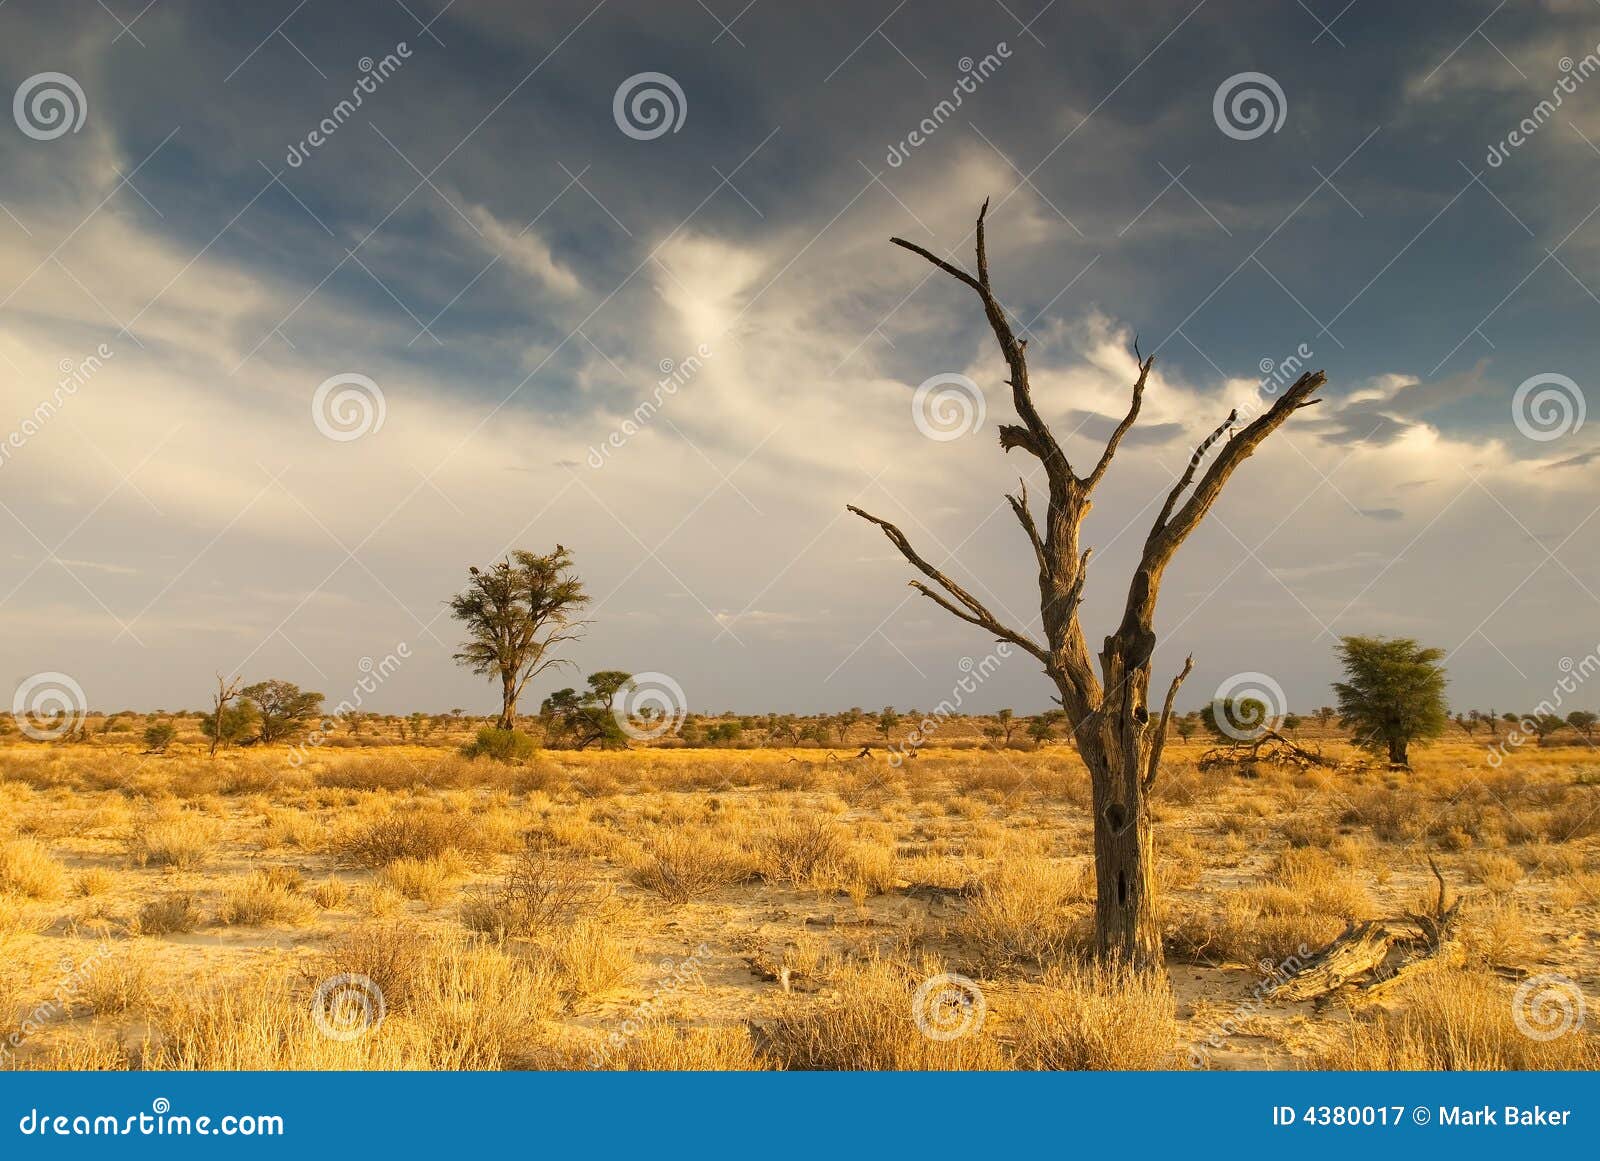 dead tree in the kalahari desert